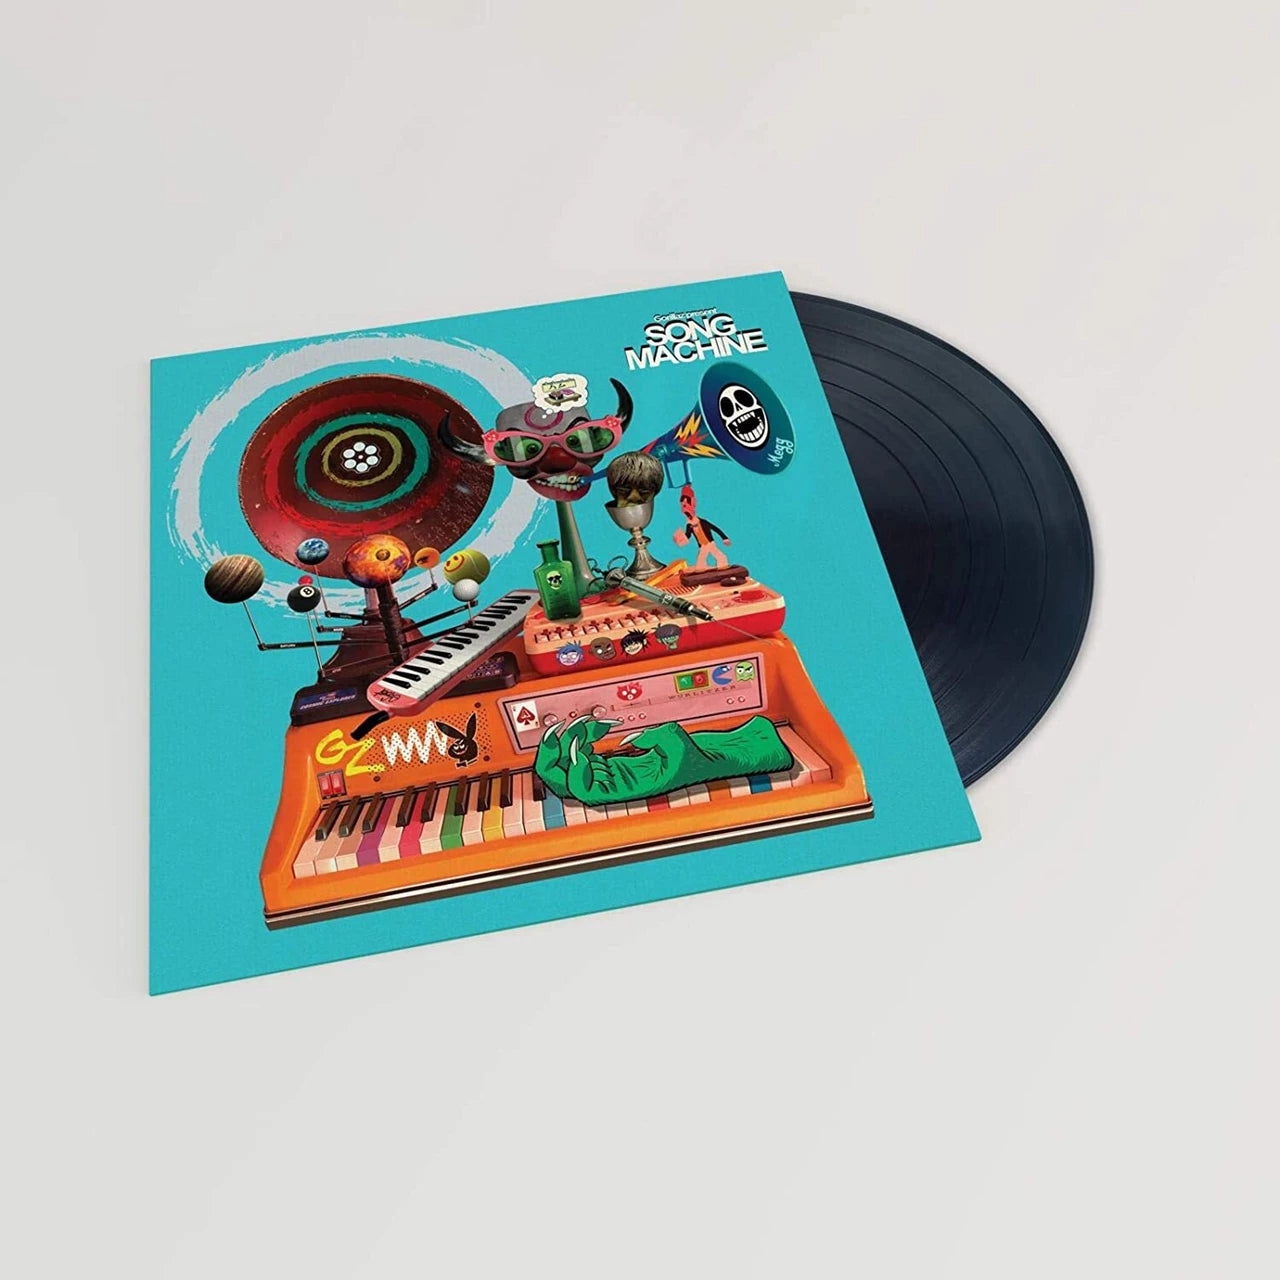 Gorillaz - Song Machine, Season One - Strange Timez: Vinyl LP